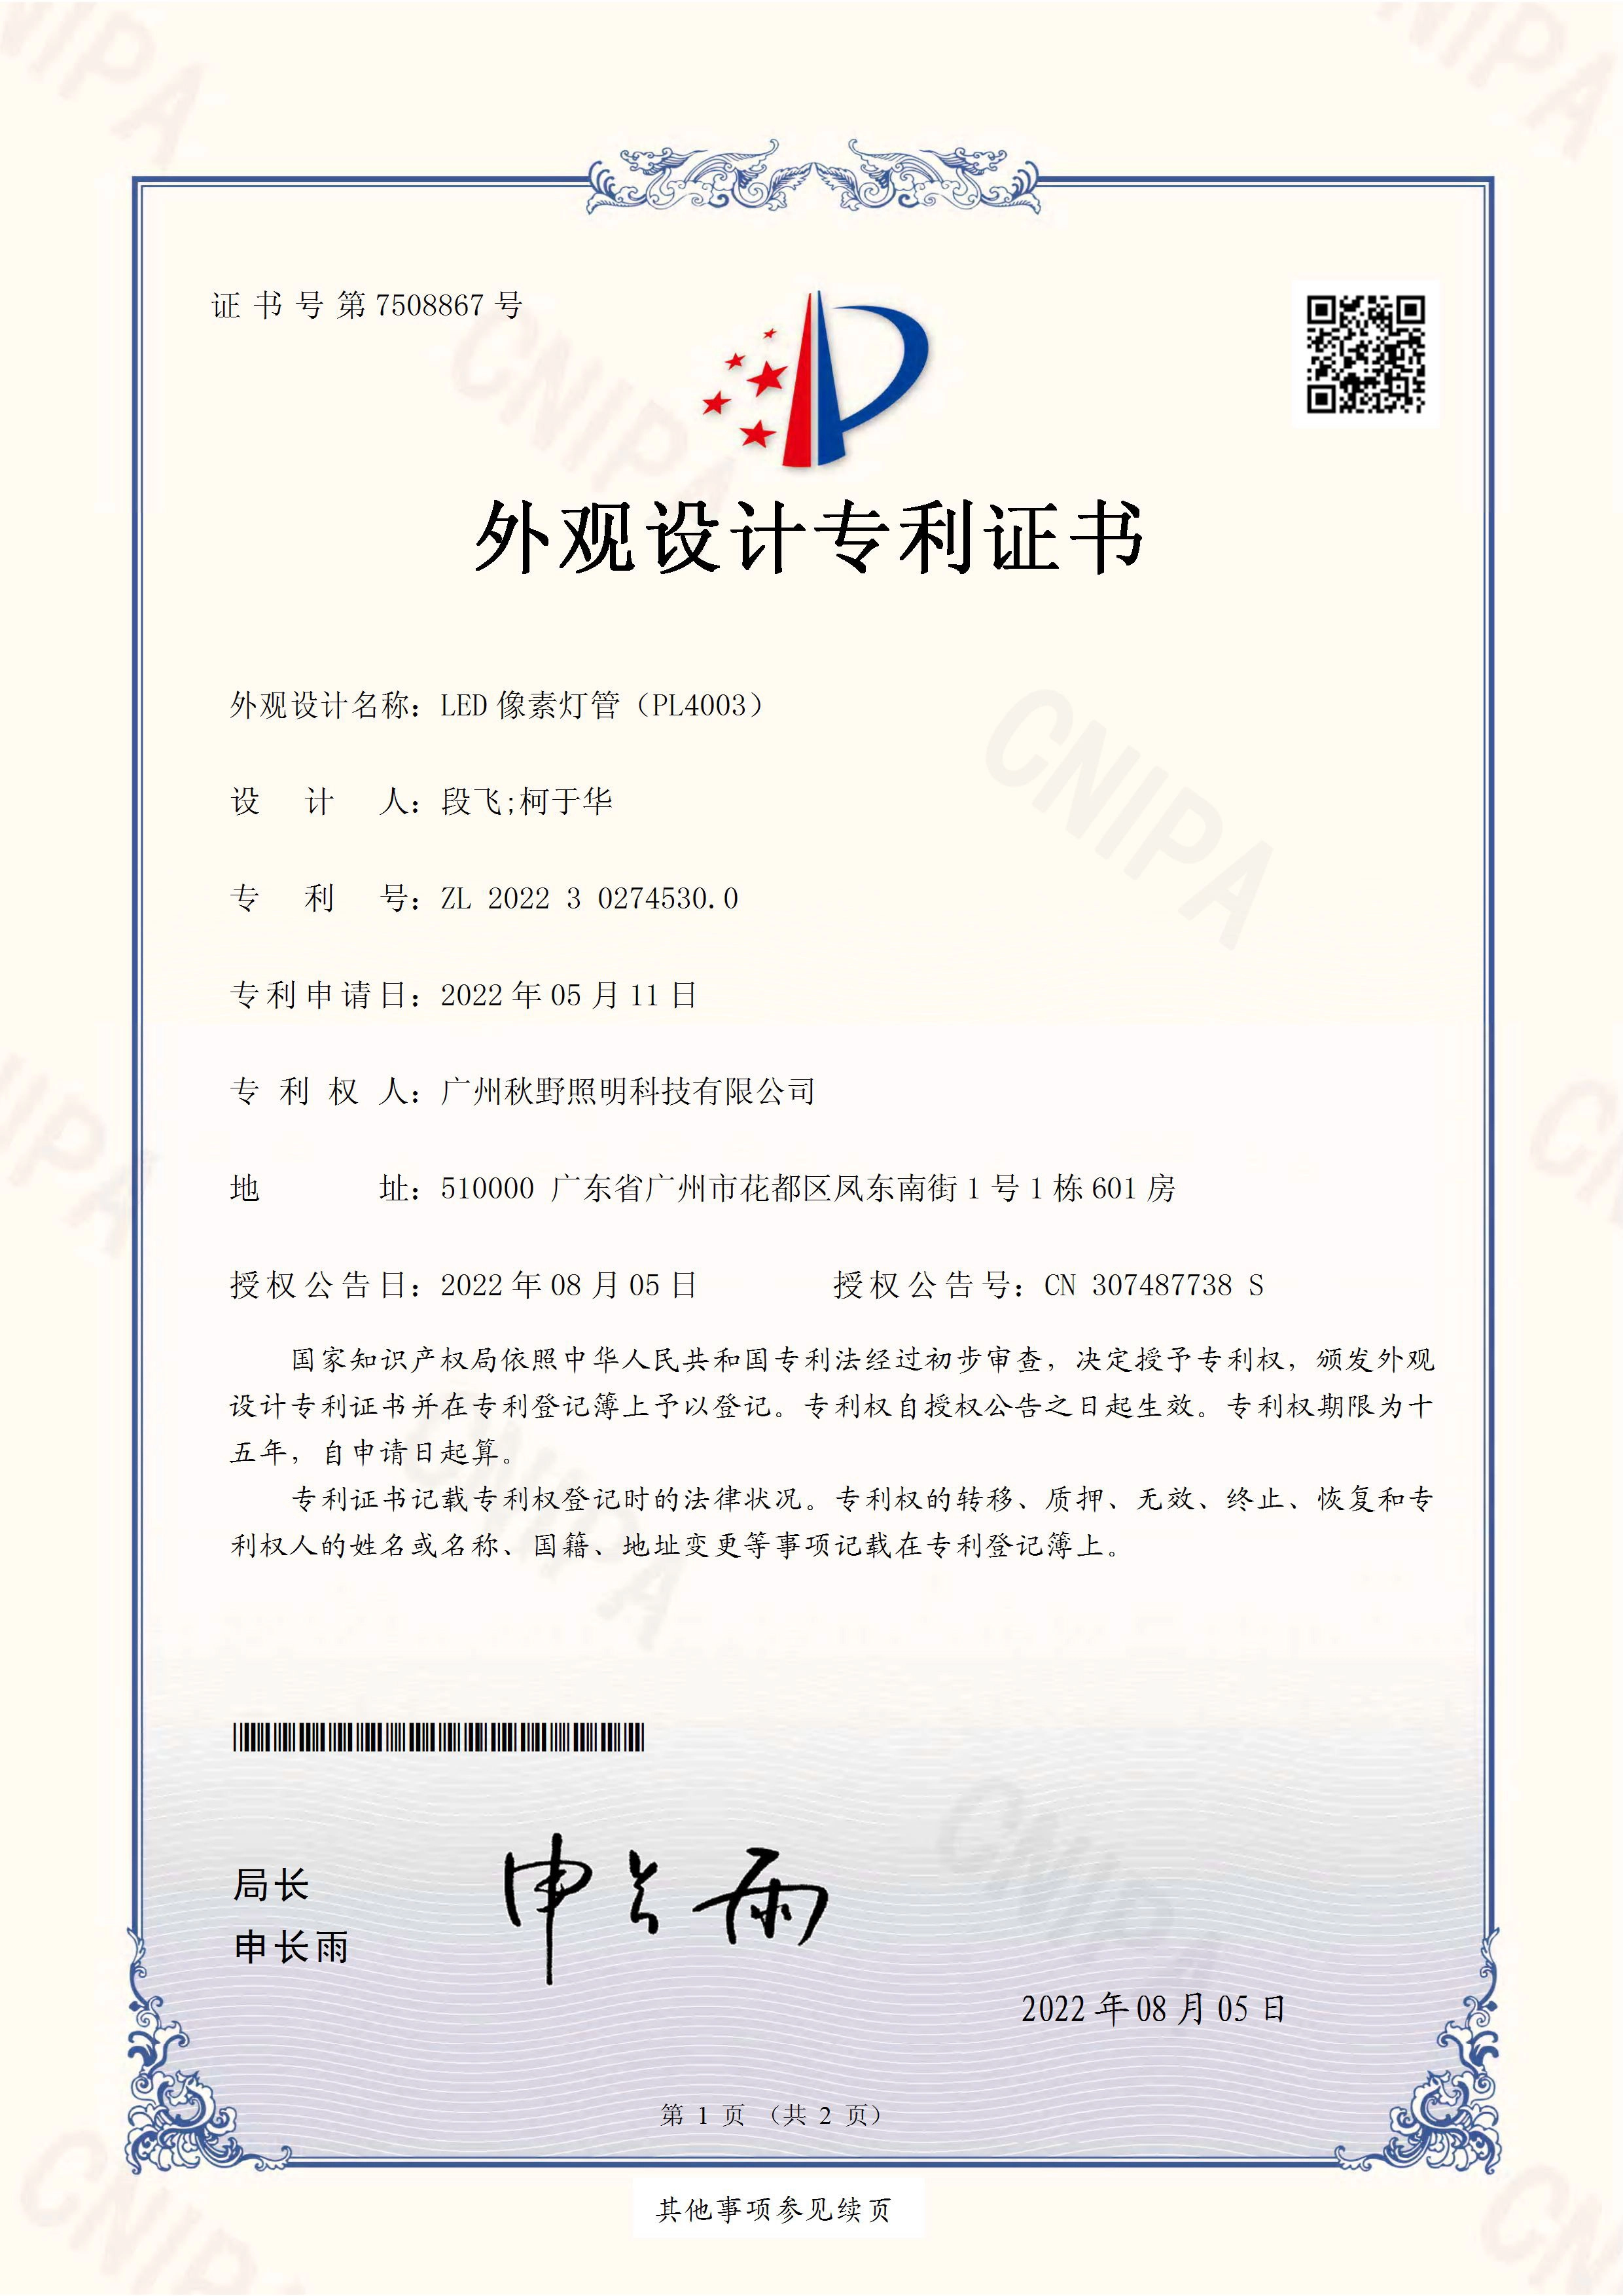 PL4003 Design Patent Certificate